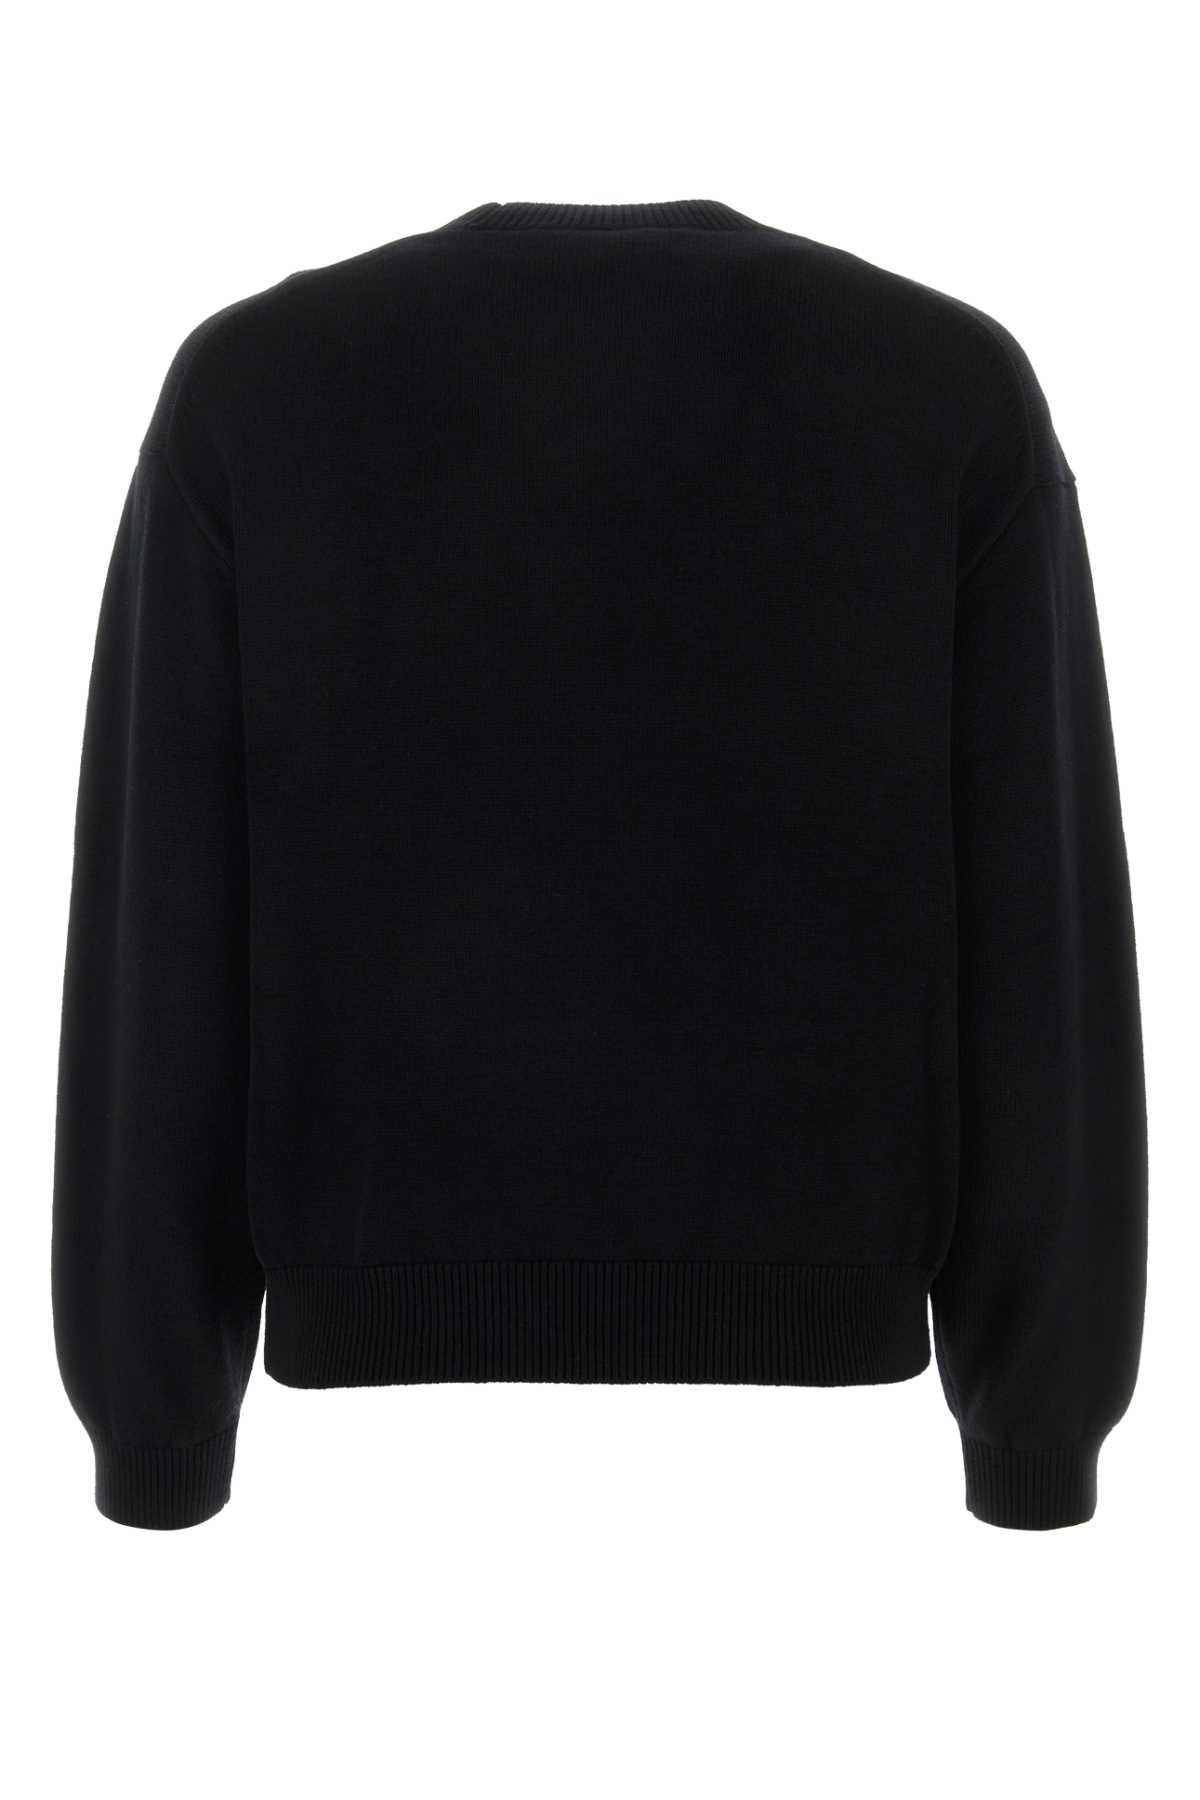 Kenzo Black Wool Blend Sweater